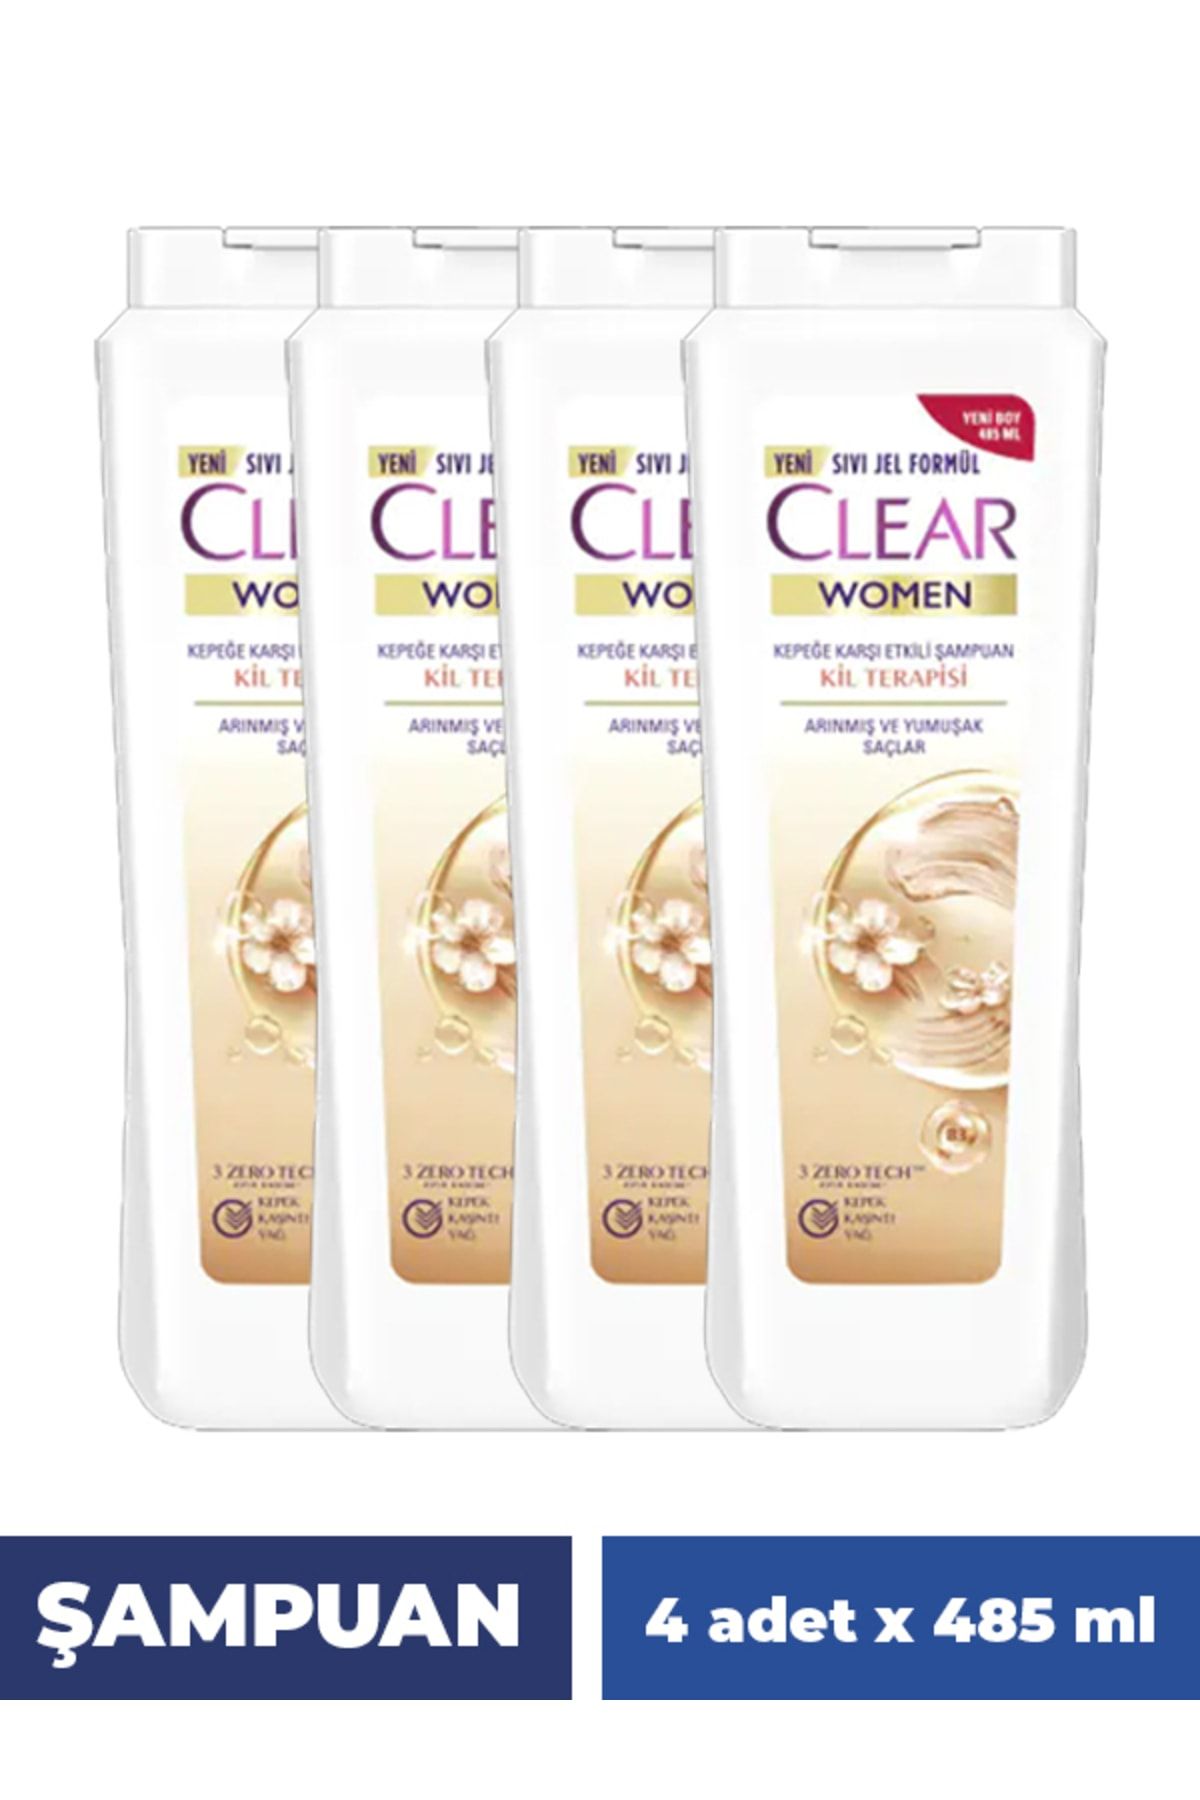 Clean & Clear Clear Women Kil Terapisi 4lü